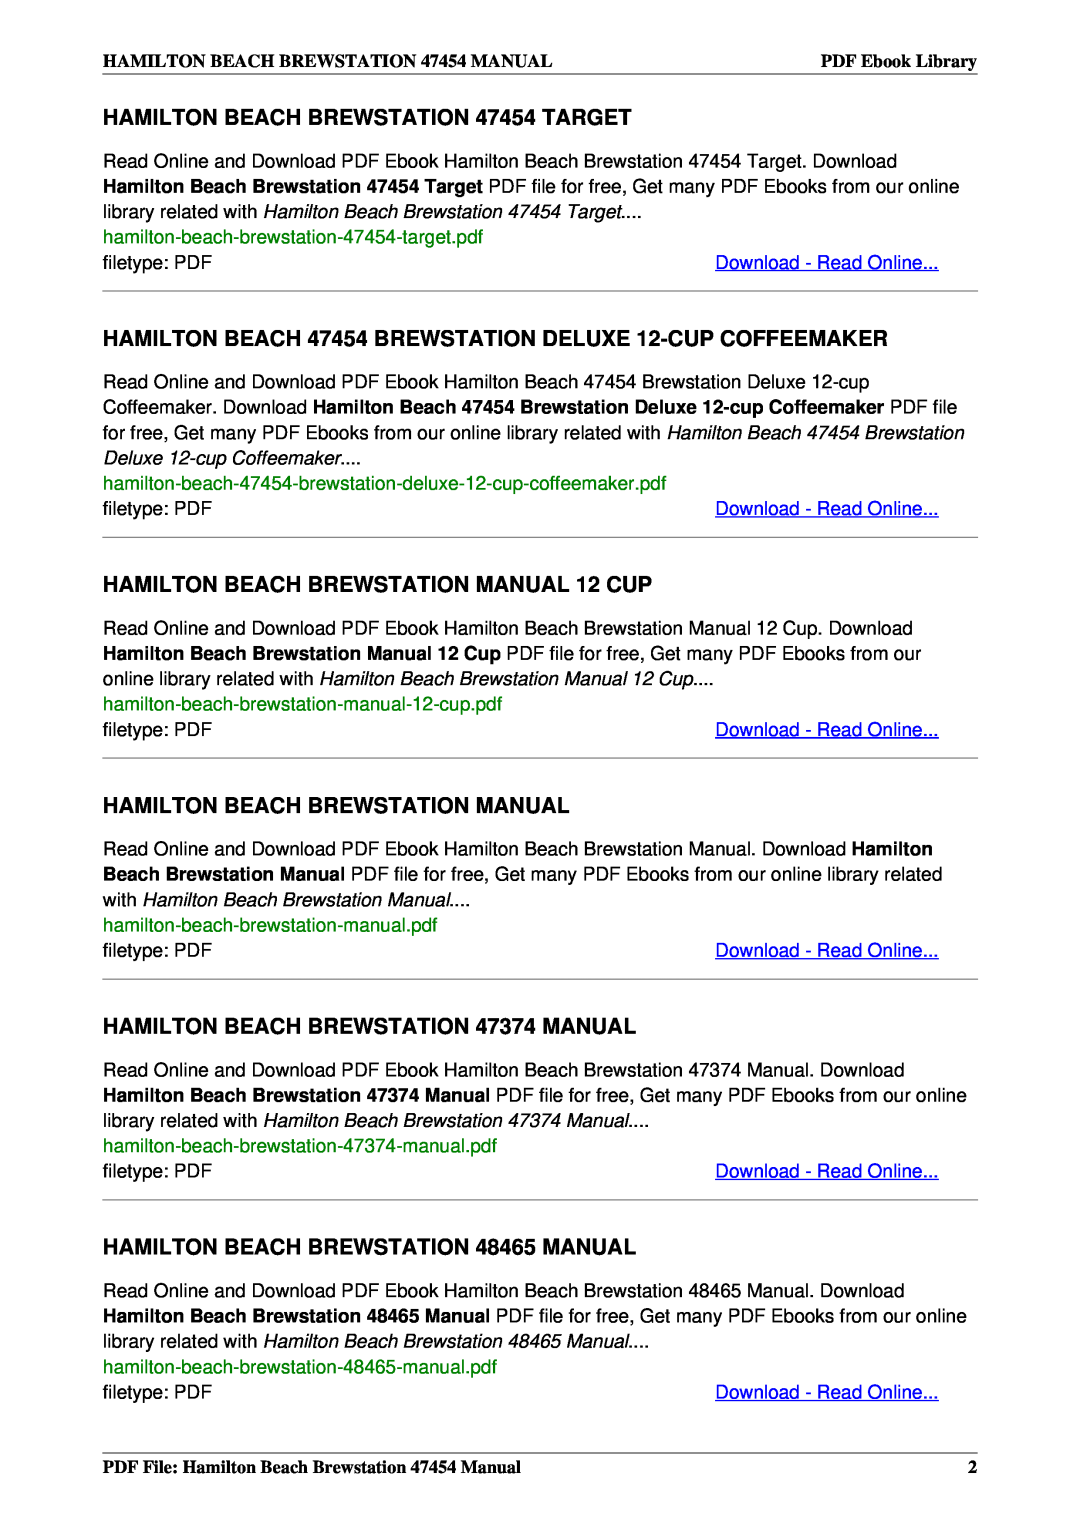 Hamilton Beach manual HAMILTON BEACH BREWSTATION 47454 TARGET, HAMILTON BEACH BREWSTATION MANUAL 12 CUP 